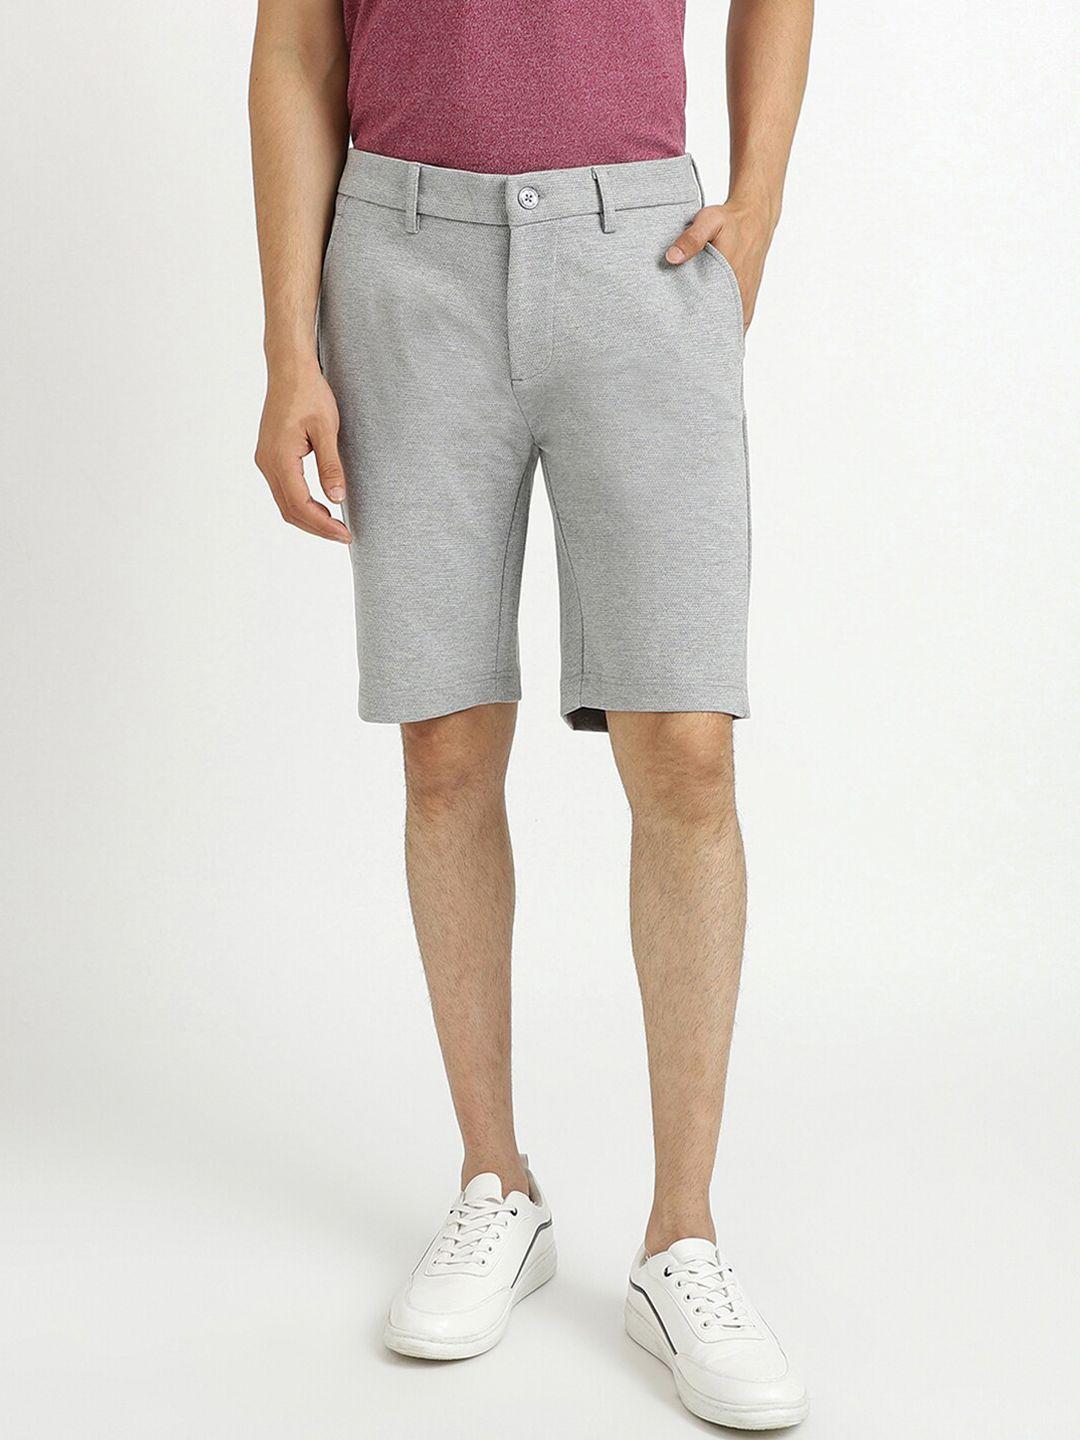 united-colors-of-benetton-men-grey-slim-fit-shorts